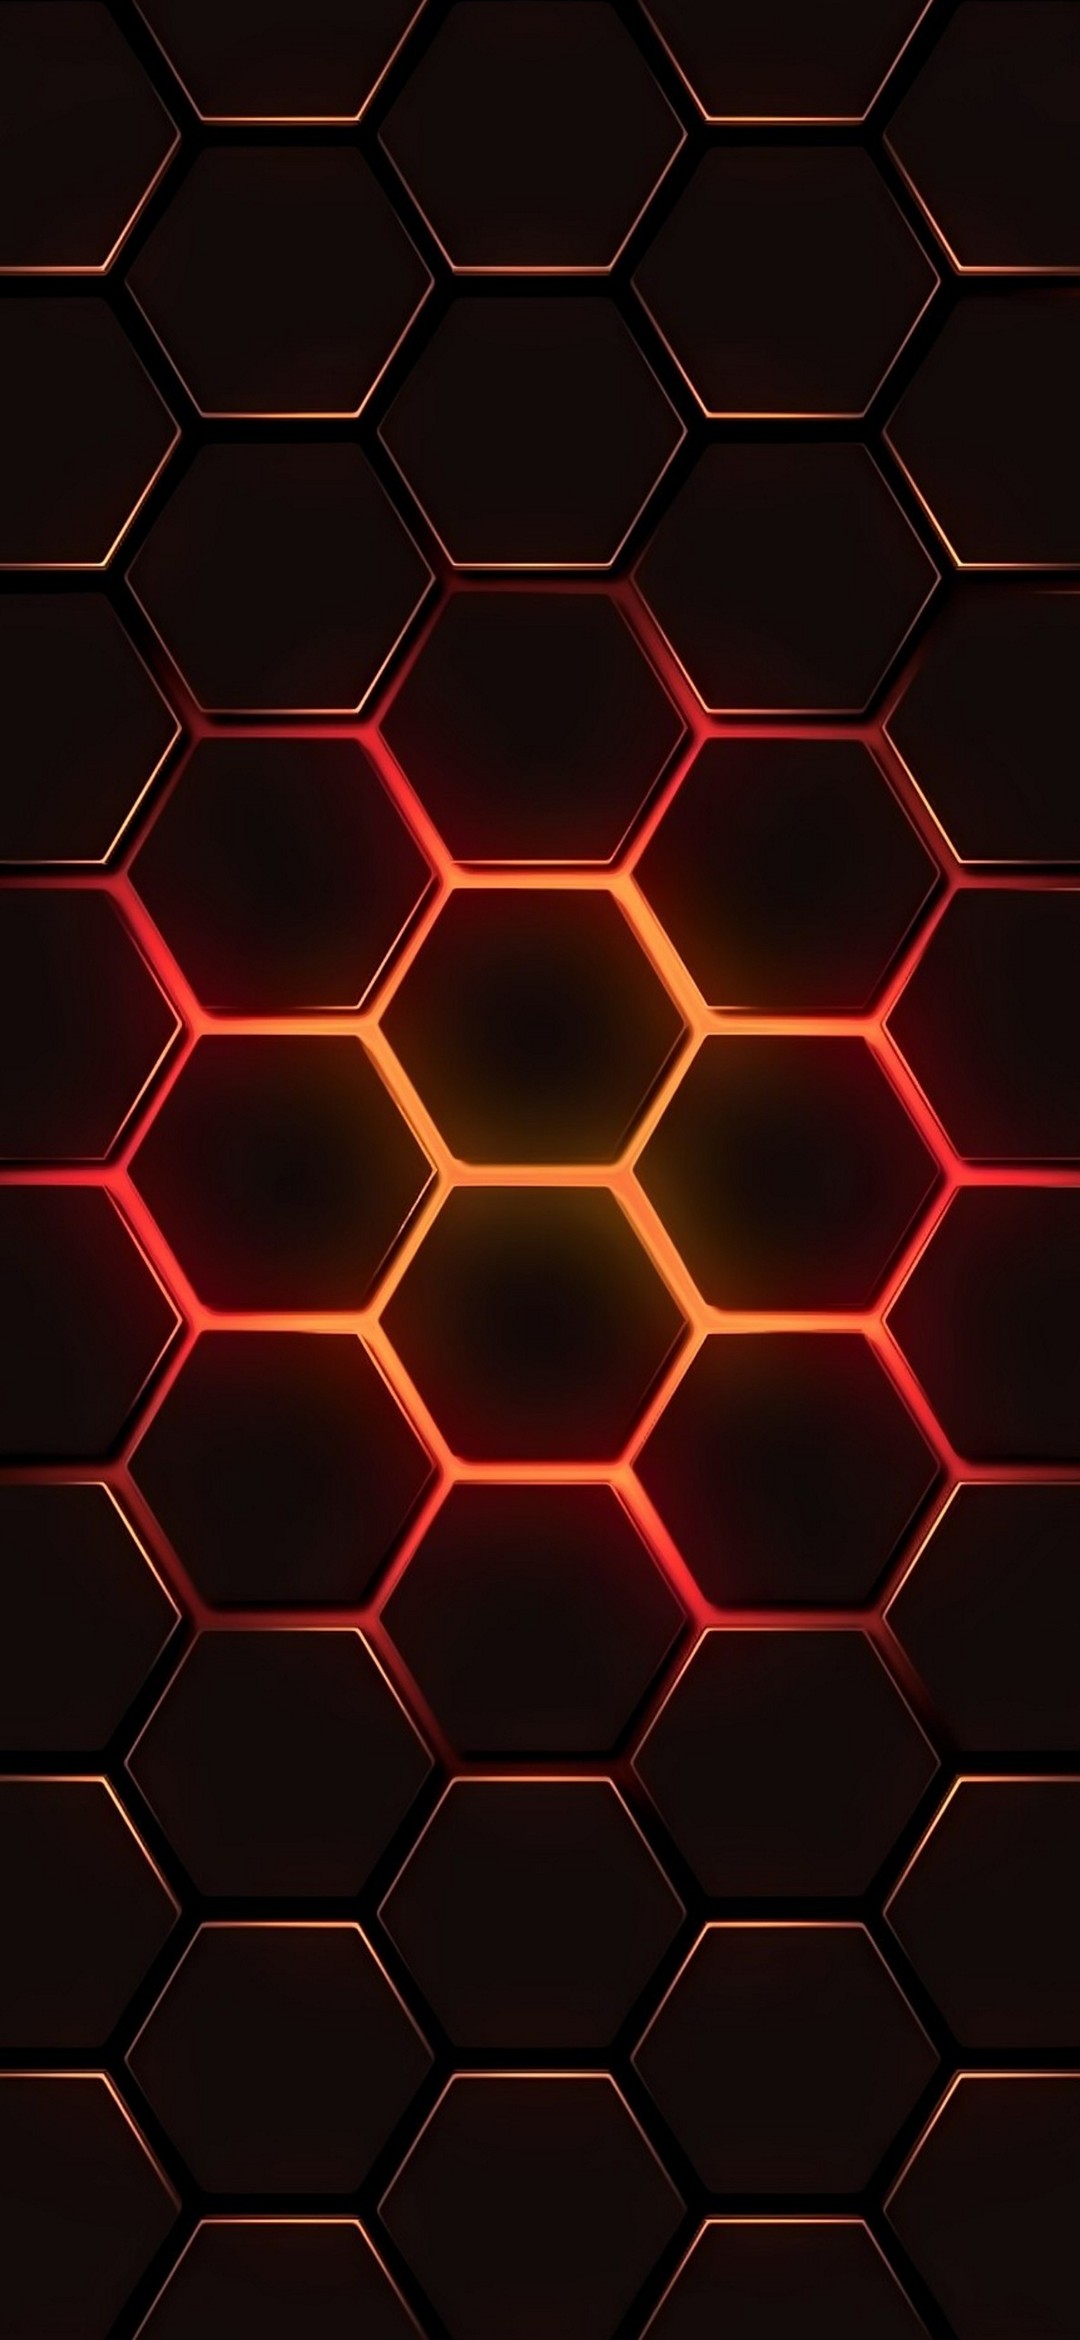 Cool Black And Orange Hexagons Rog Phone 3 Android スマホ壁紙 待ち受け スマラン